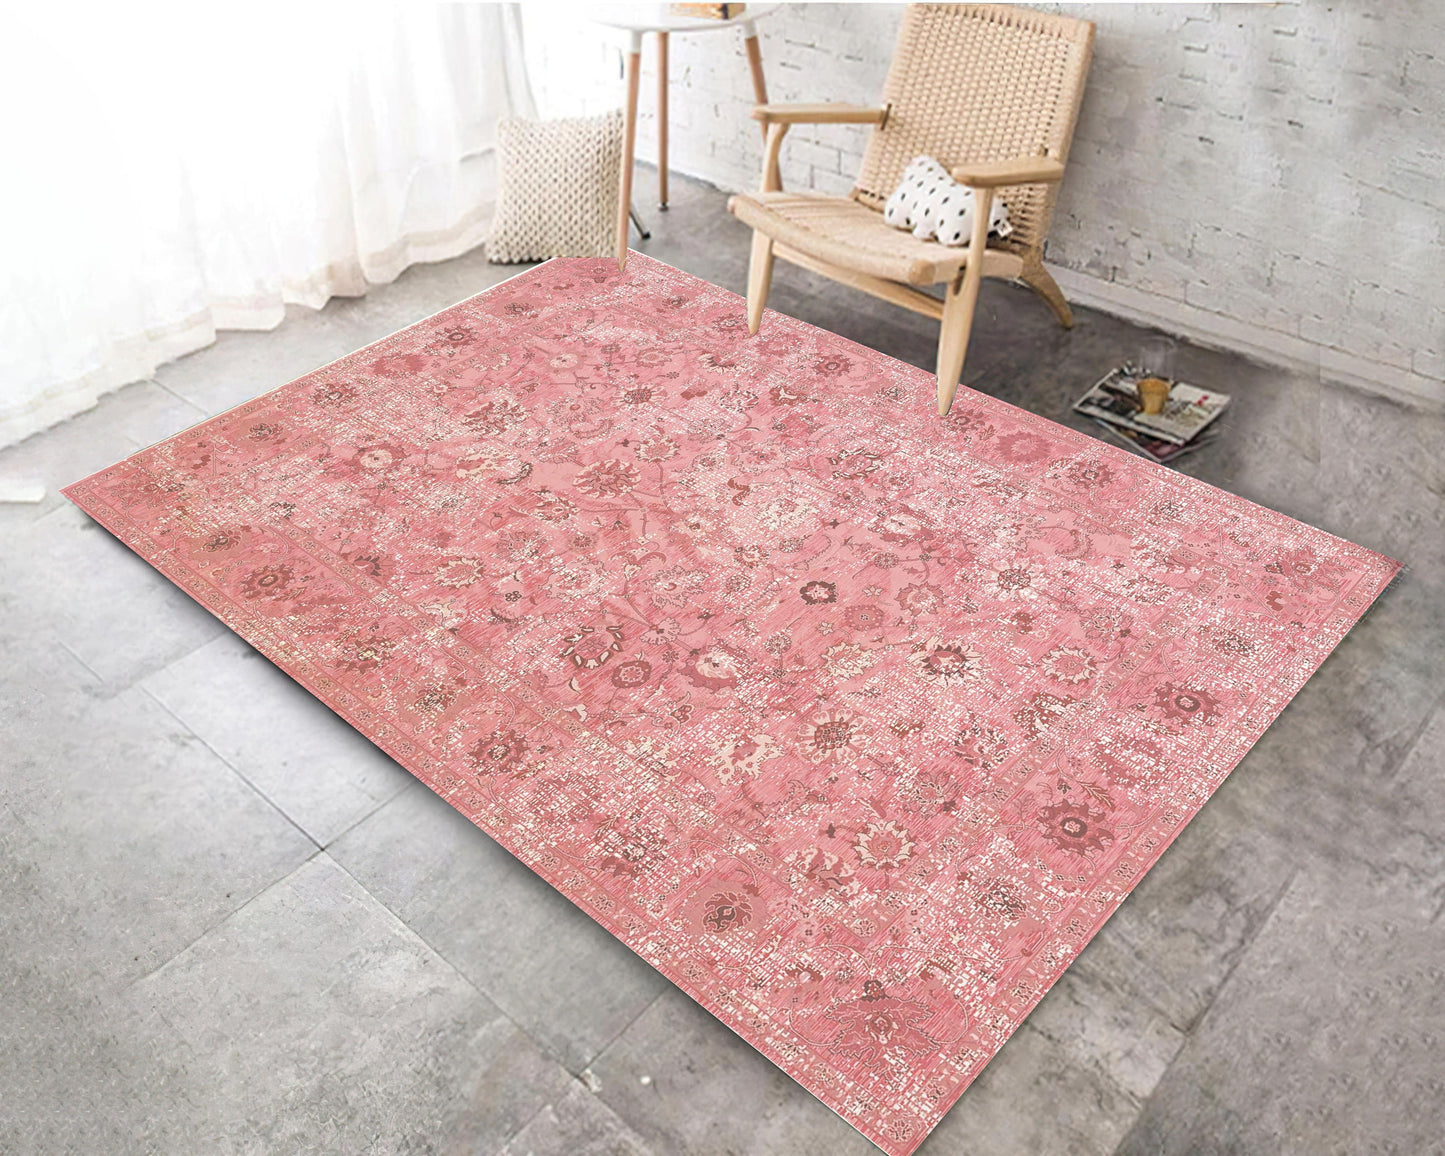 Pink Classical Themed Rug, Vintage Tapestry Area Mat, Grandiose Era Floor Bedroom Carpet, Turkish Motif Decor